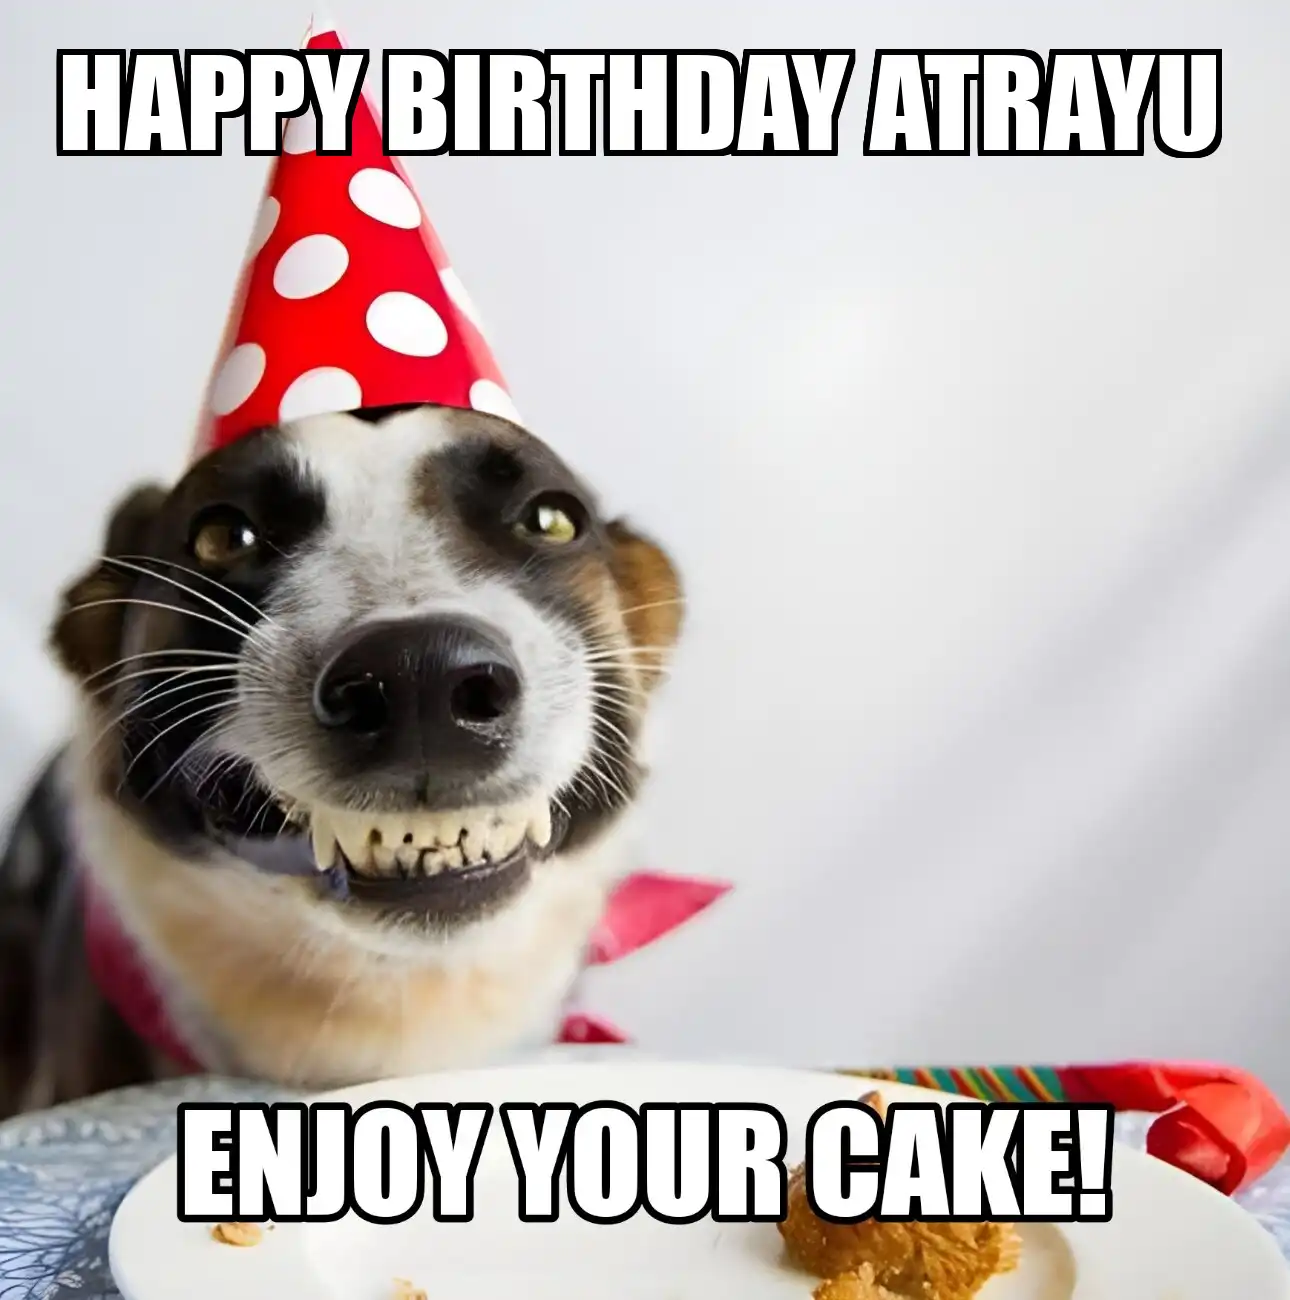 Happy Birthday Atrayu Enjoy Your Cake Dog Meme